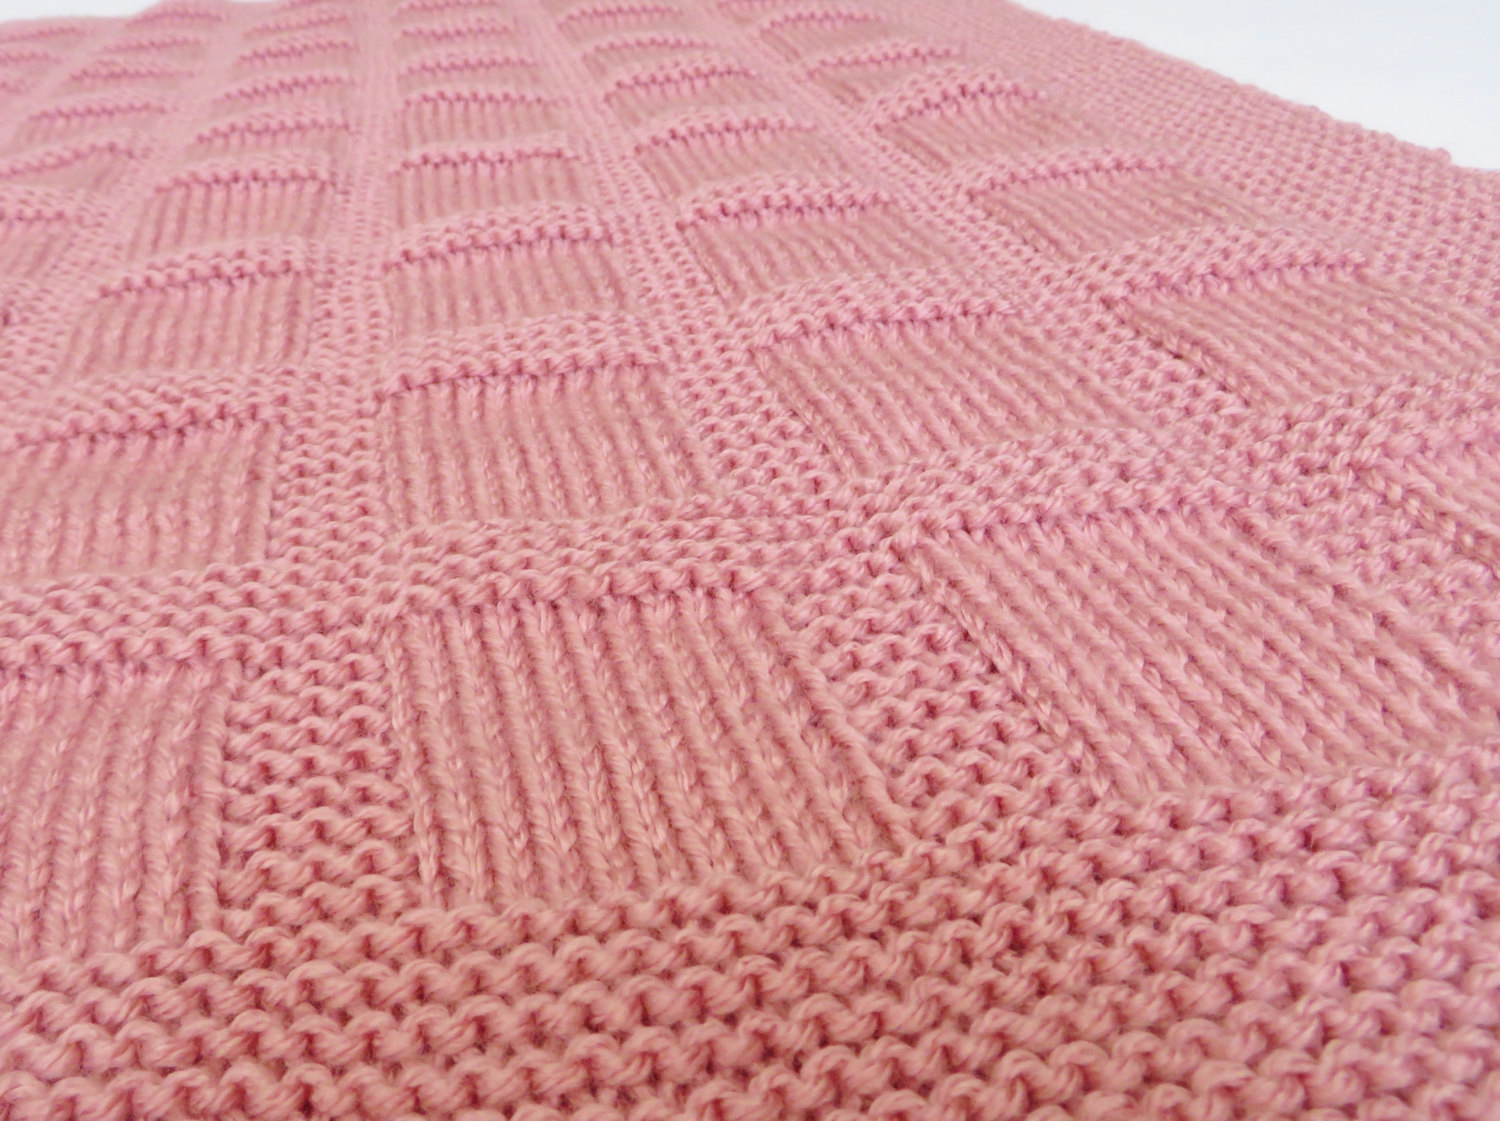 Car Seat Knitted Blanket Pattern Knitting Pattern Knit Ba Blanket Pattern Checks And Blocks